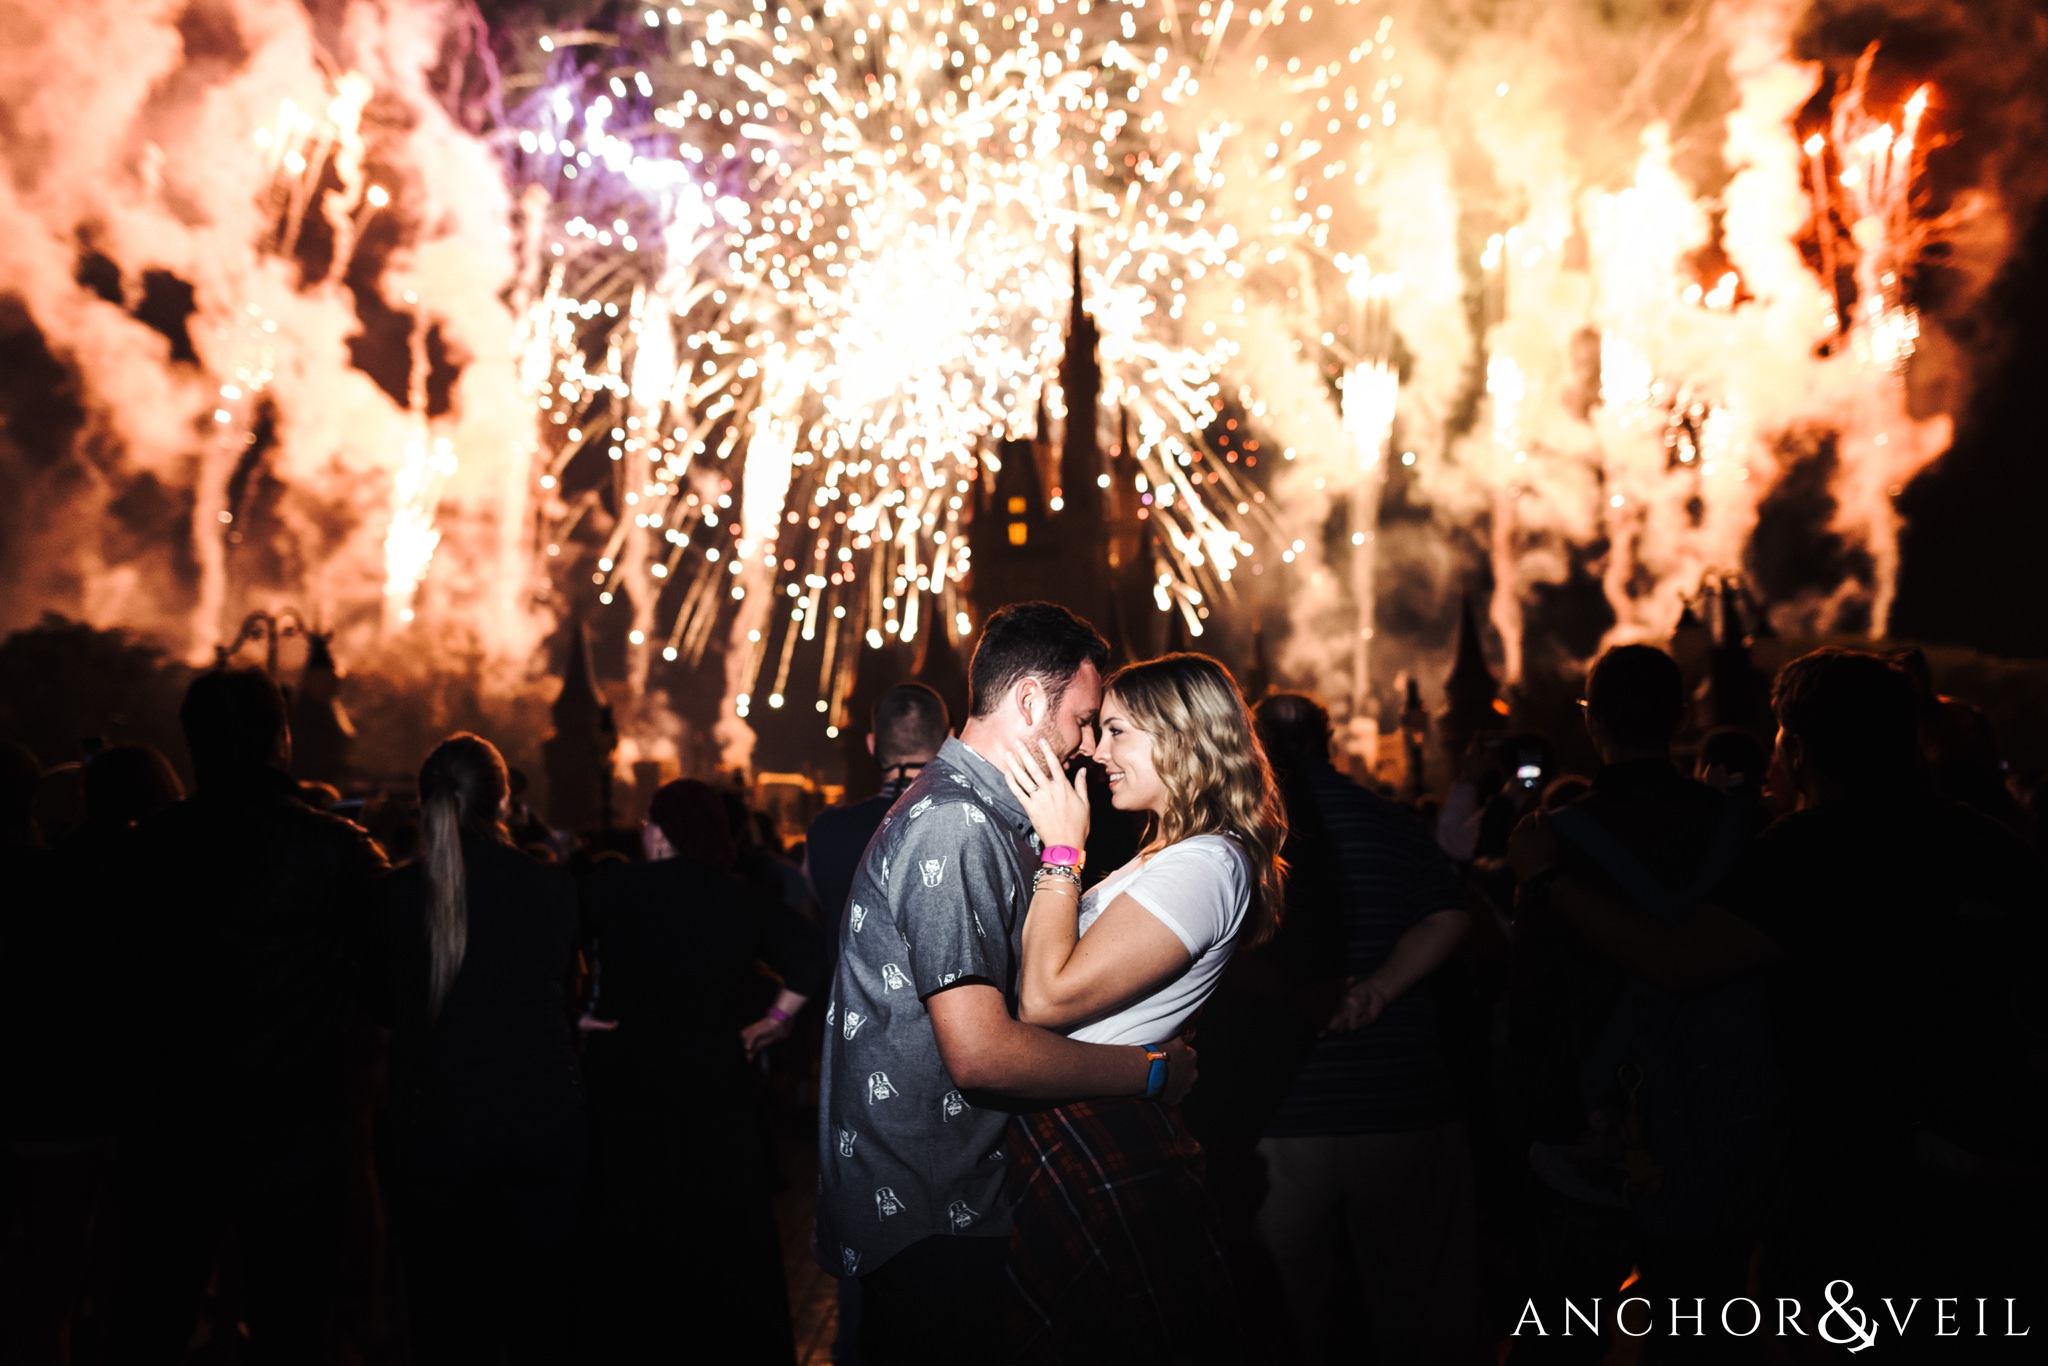 Disney Castle Fireworks love during their Disney world engagement session at Disney's Magic Kingdom